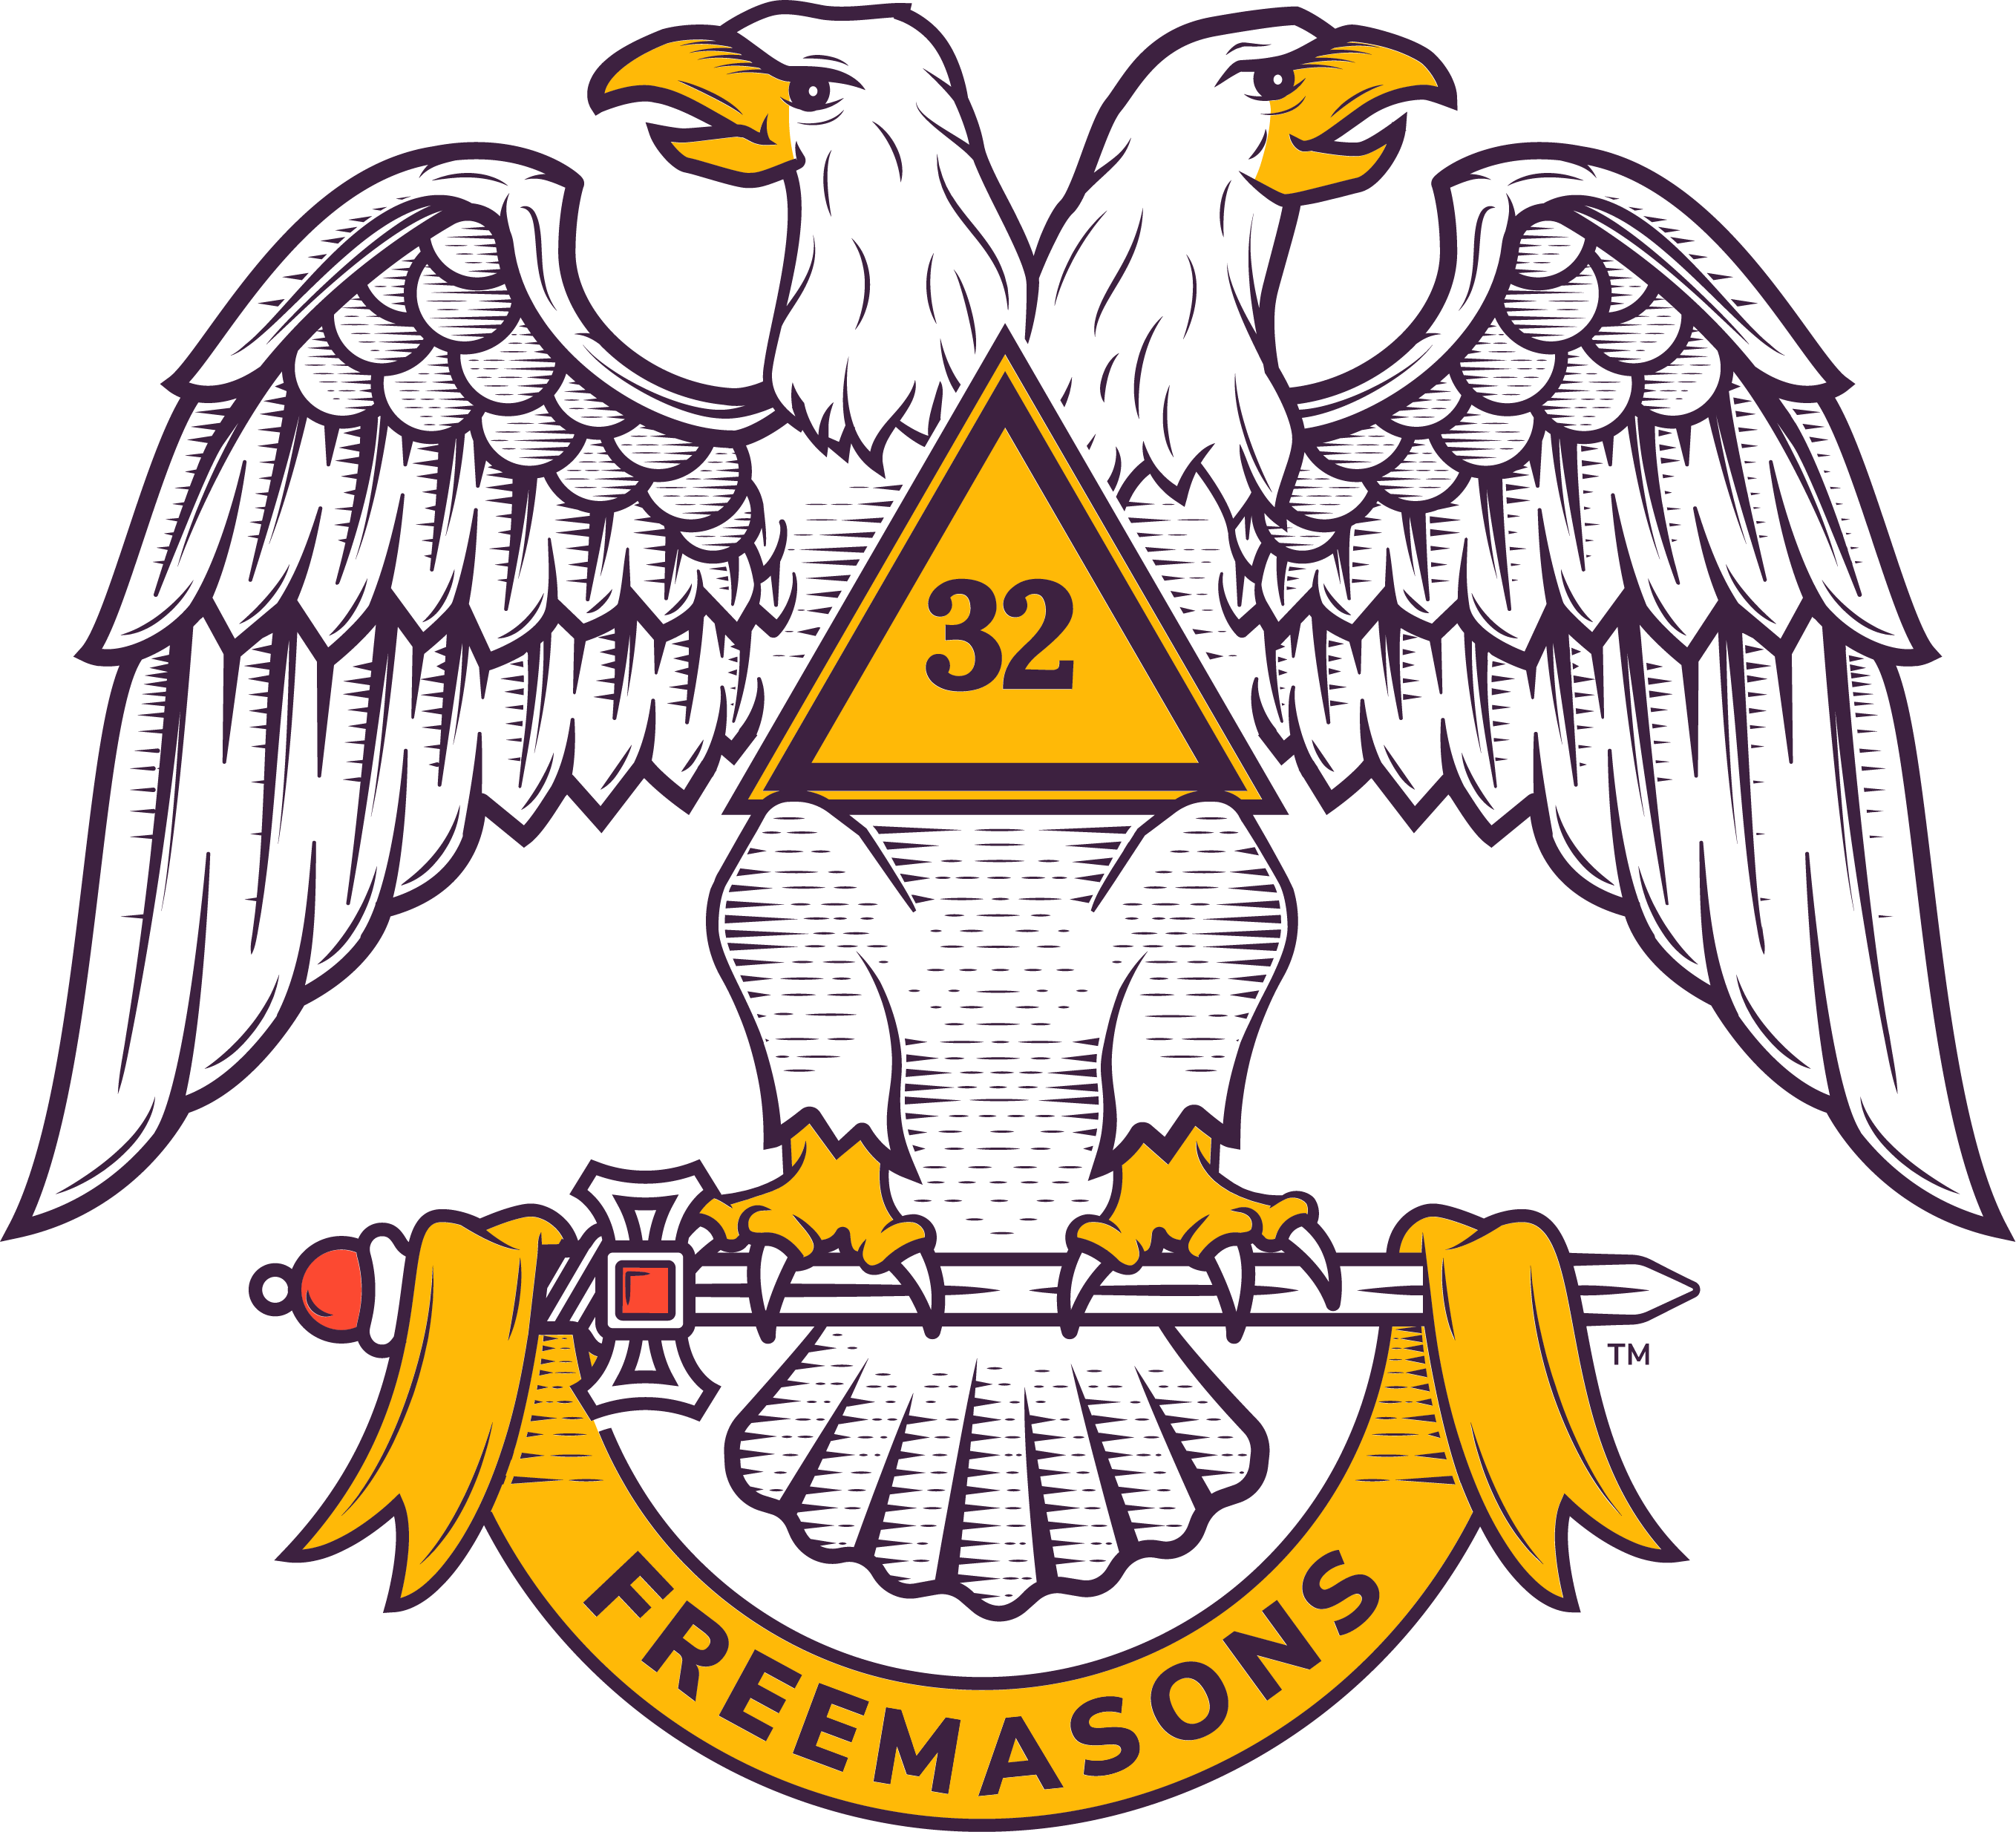 Masonic Rose Croix 33rd Degree Eagle for Collarette Jewel Medal masons Regalia